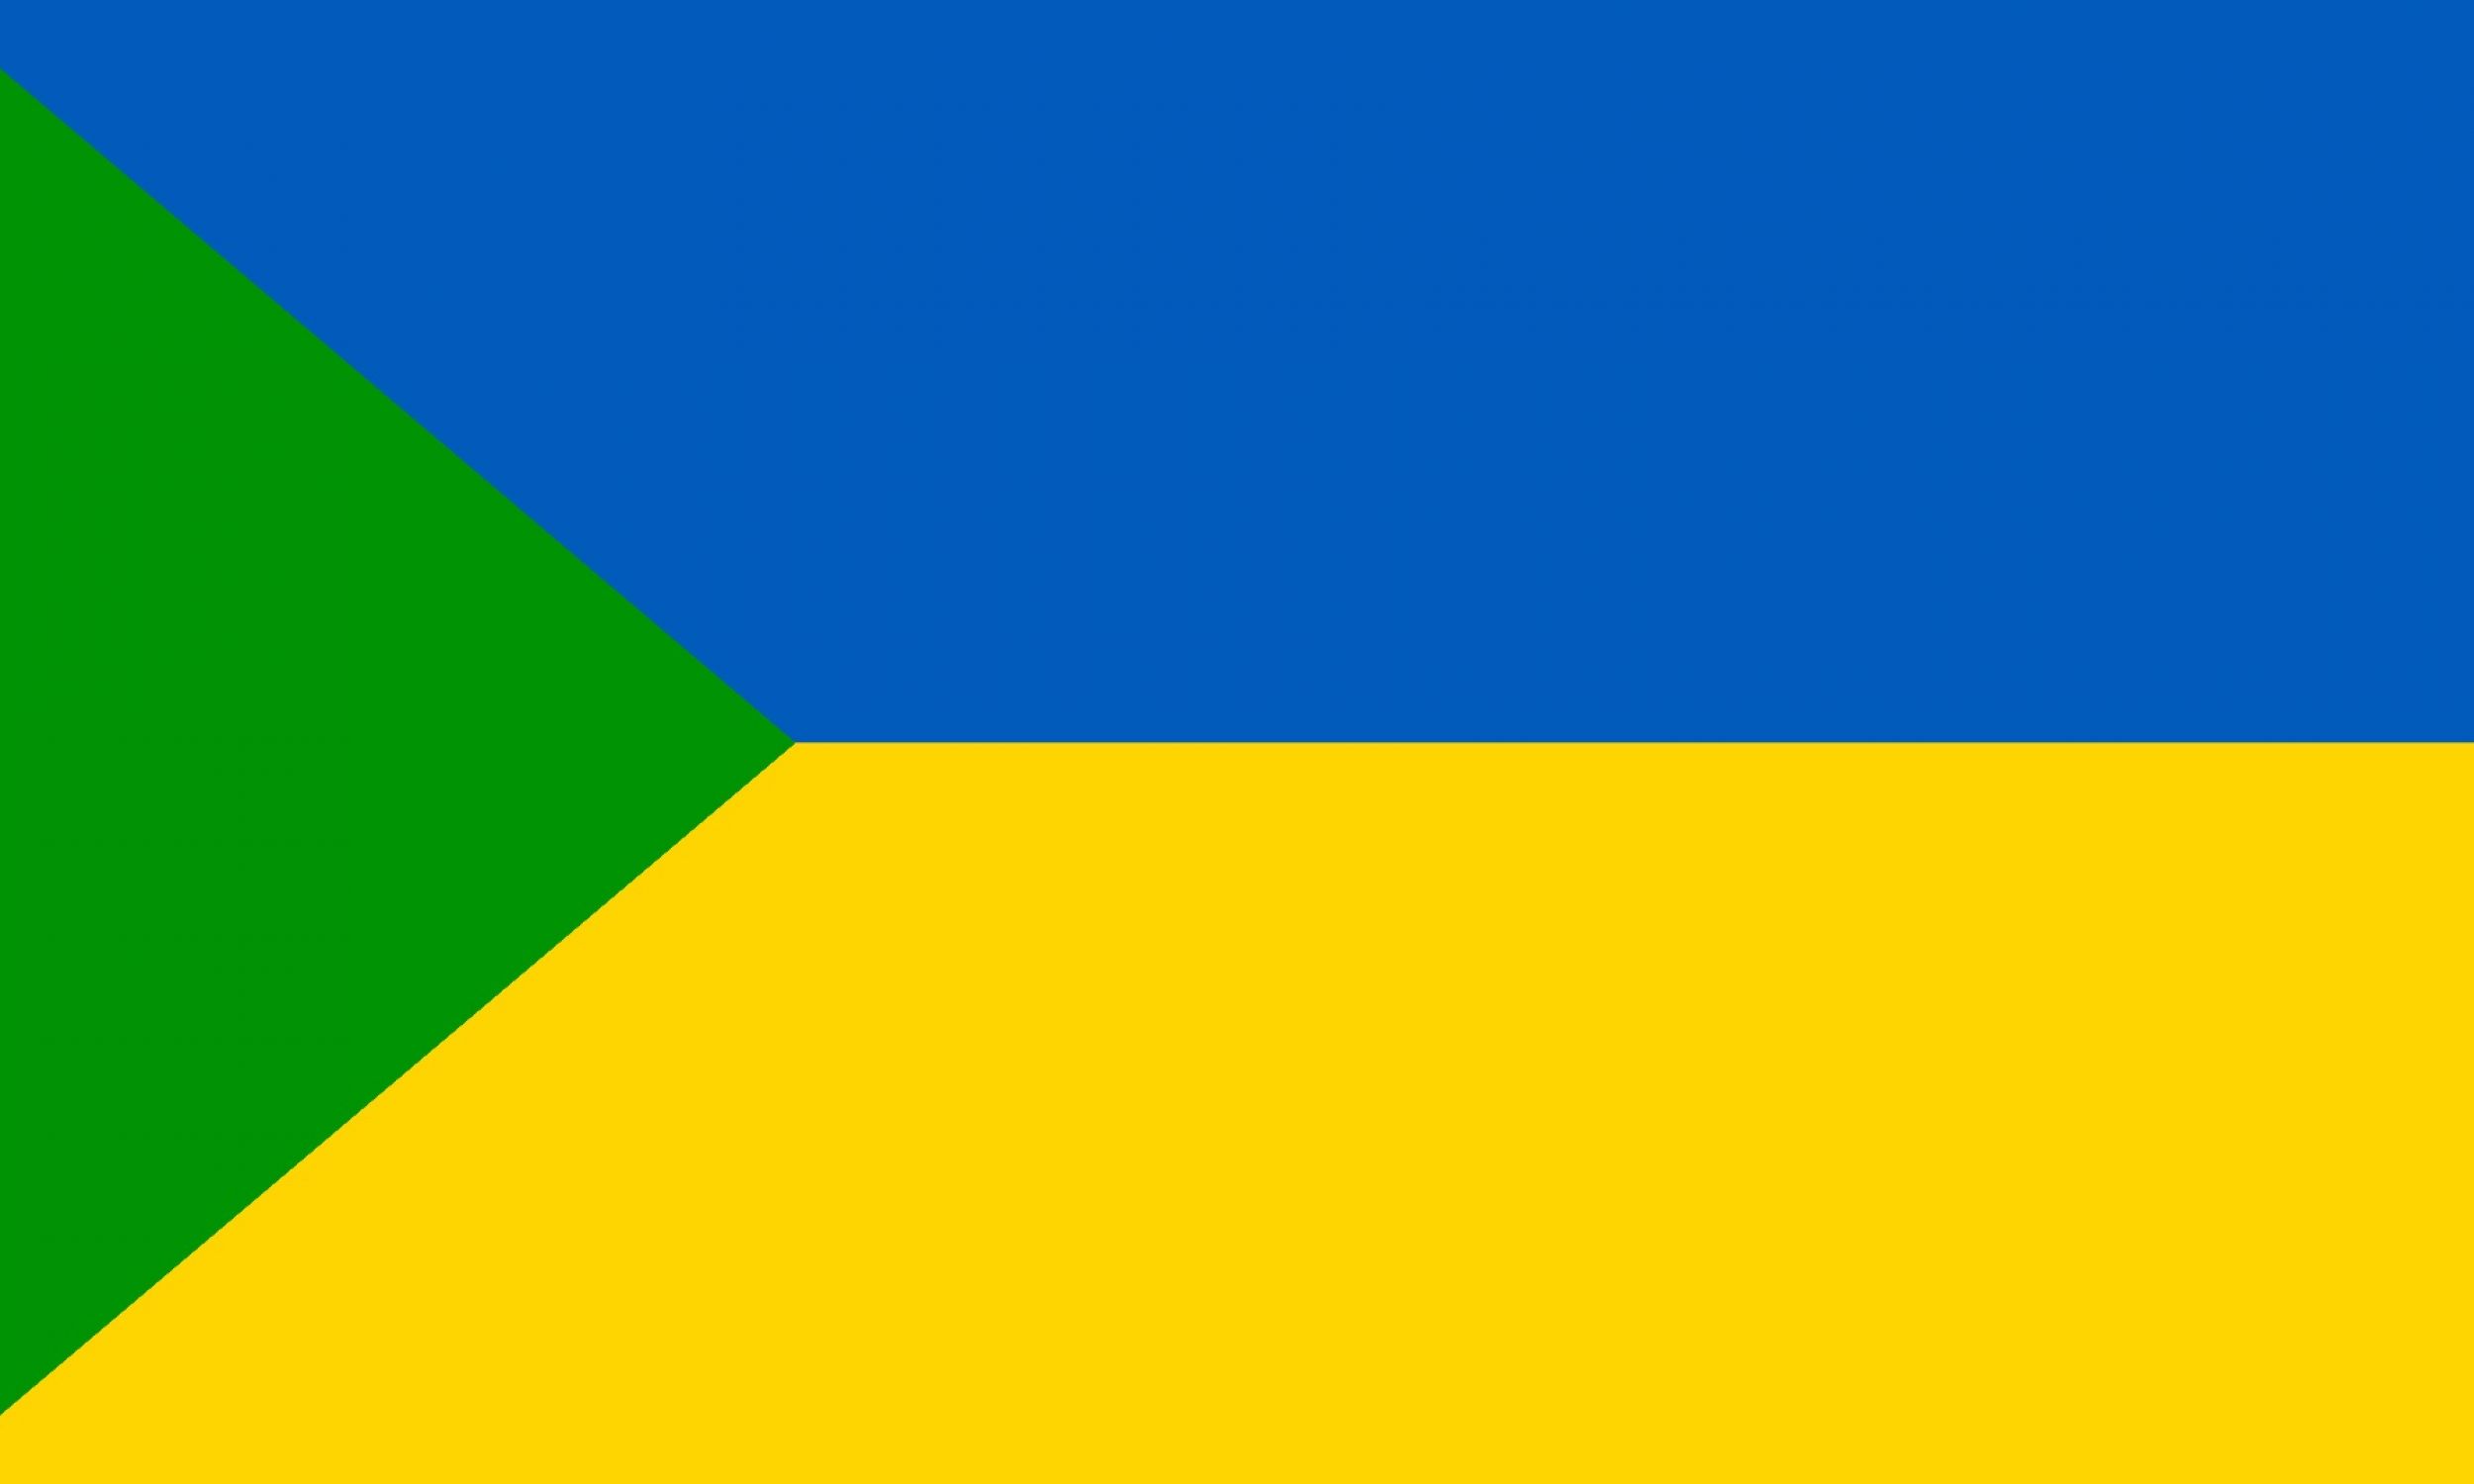 Flaga Zielonego Klinu. Fot. Argenciy - Praca własnа, CC BY-SA 4.0, https://commons.wikimedia.org/w/index.php?curid=82145095